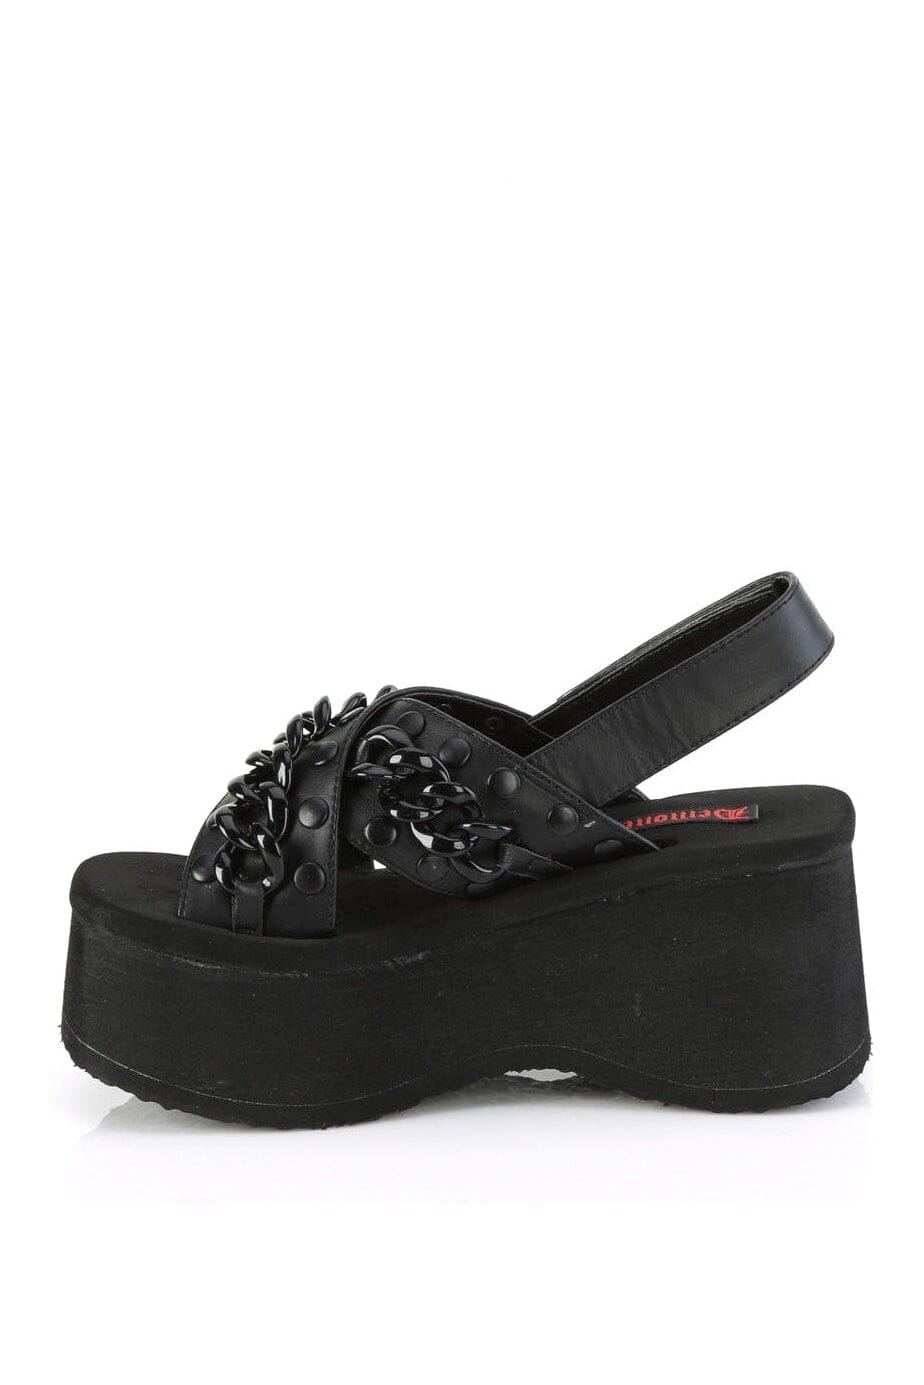 FUNN-12 Black Vegan Leather Sandal-Sandals-Demonia-SEXYSHOES.COM